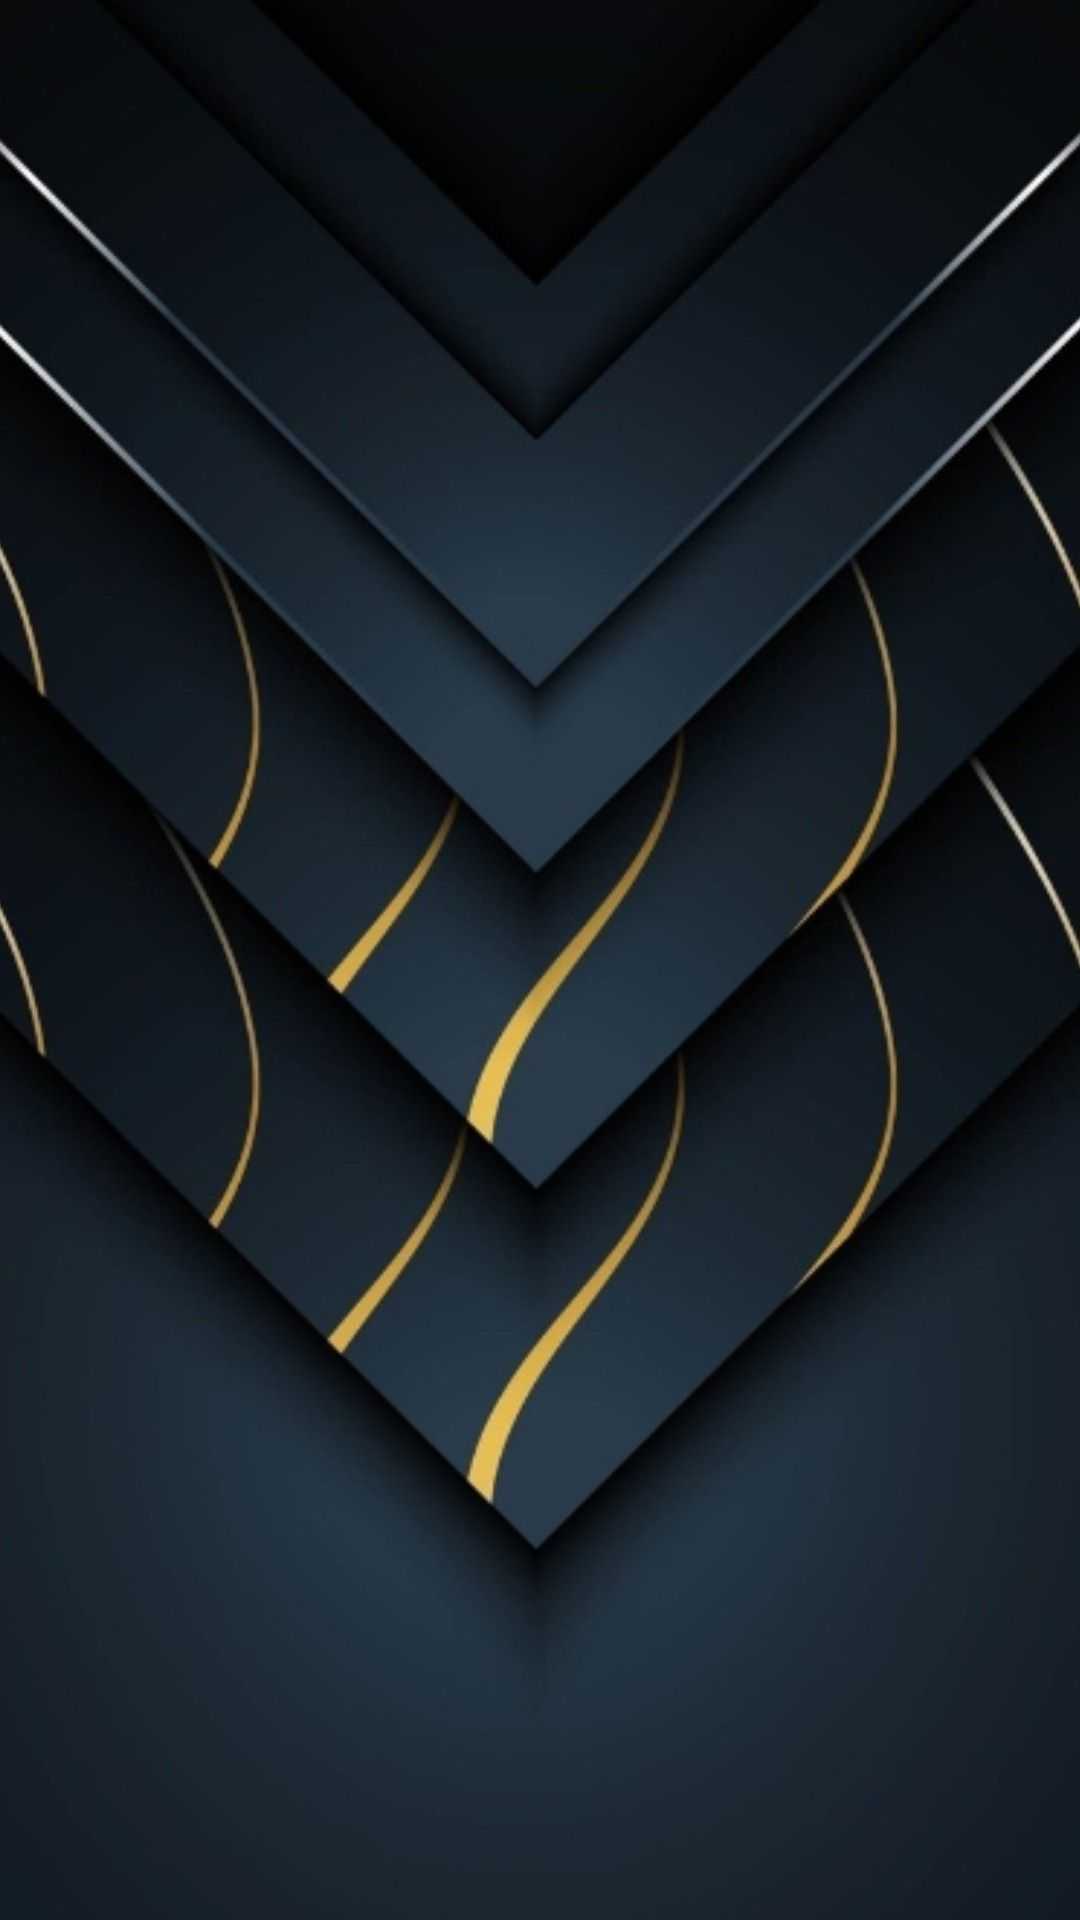 Elegant Iphone Wallpaper